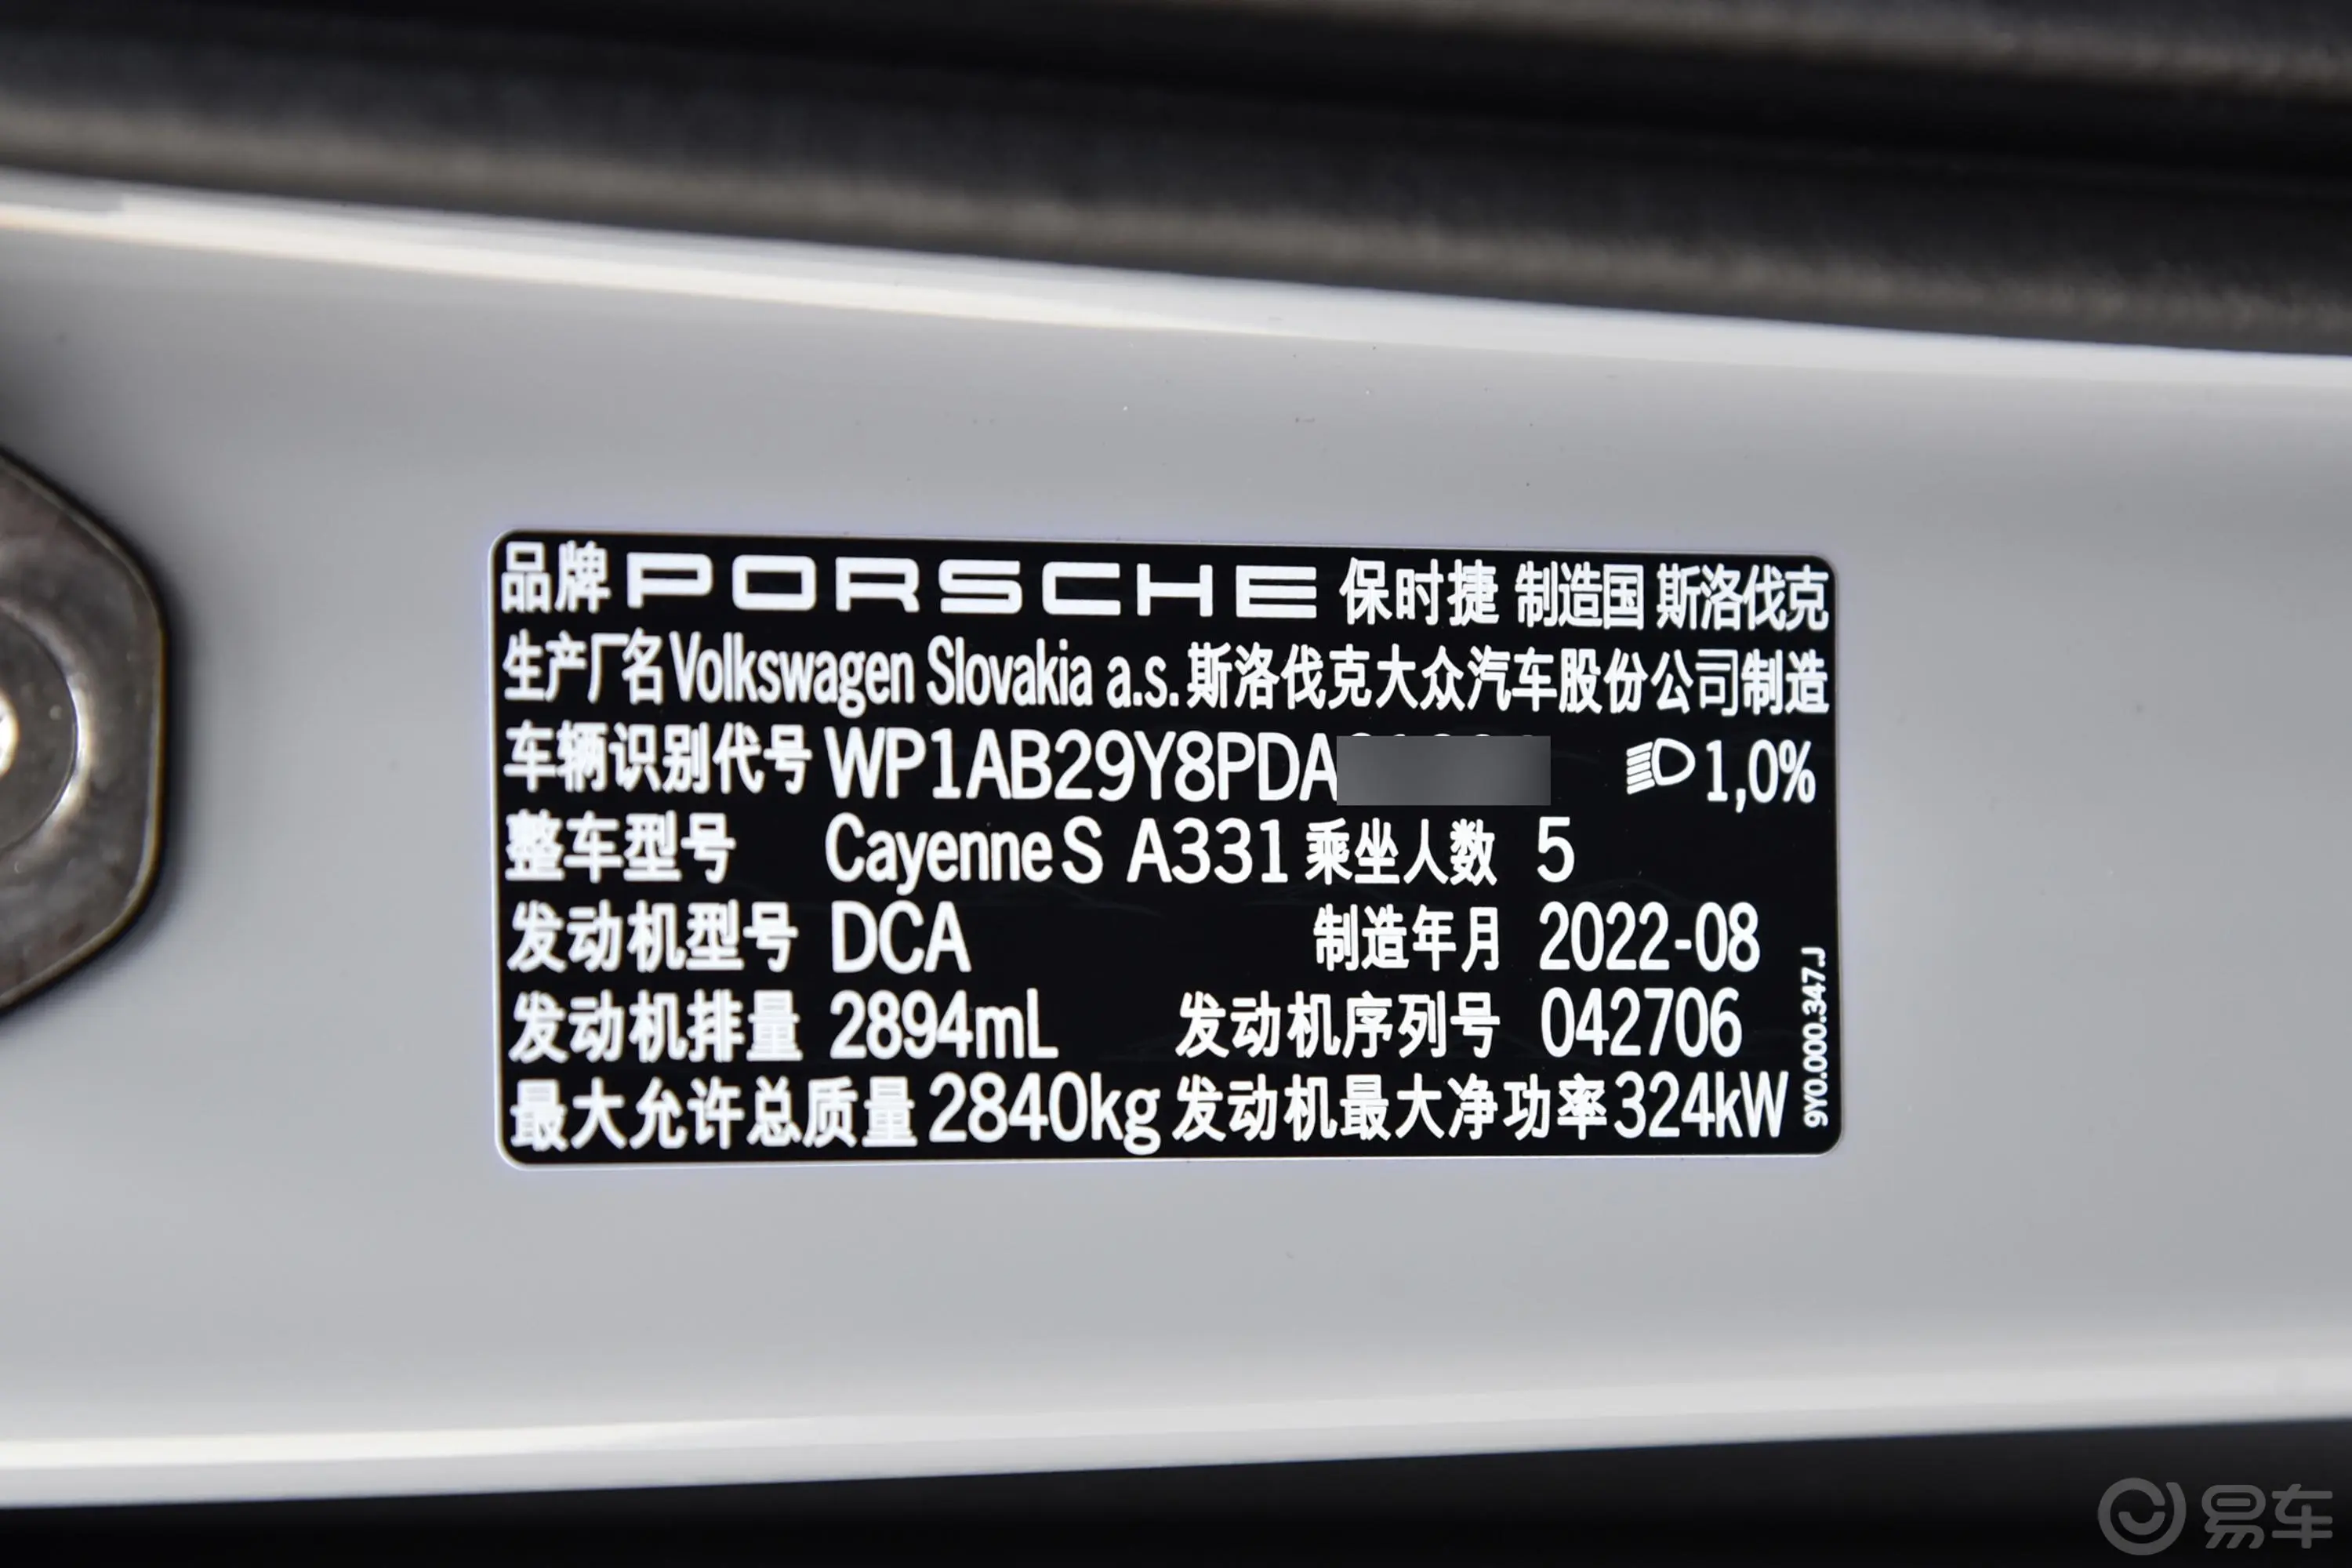 CayenneCayenne S 2.9T 铂金版车辆信息铭牌